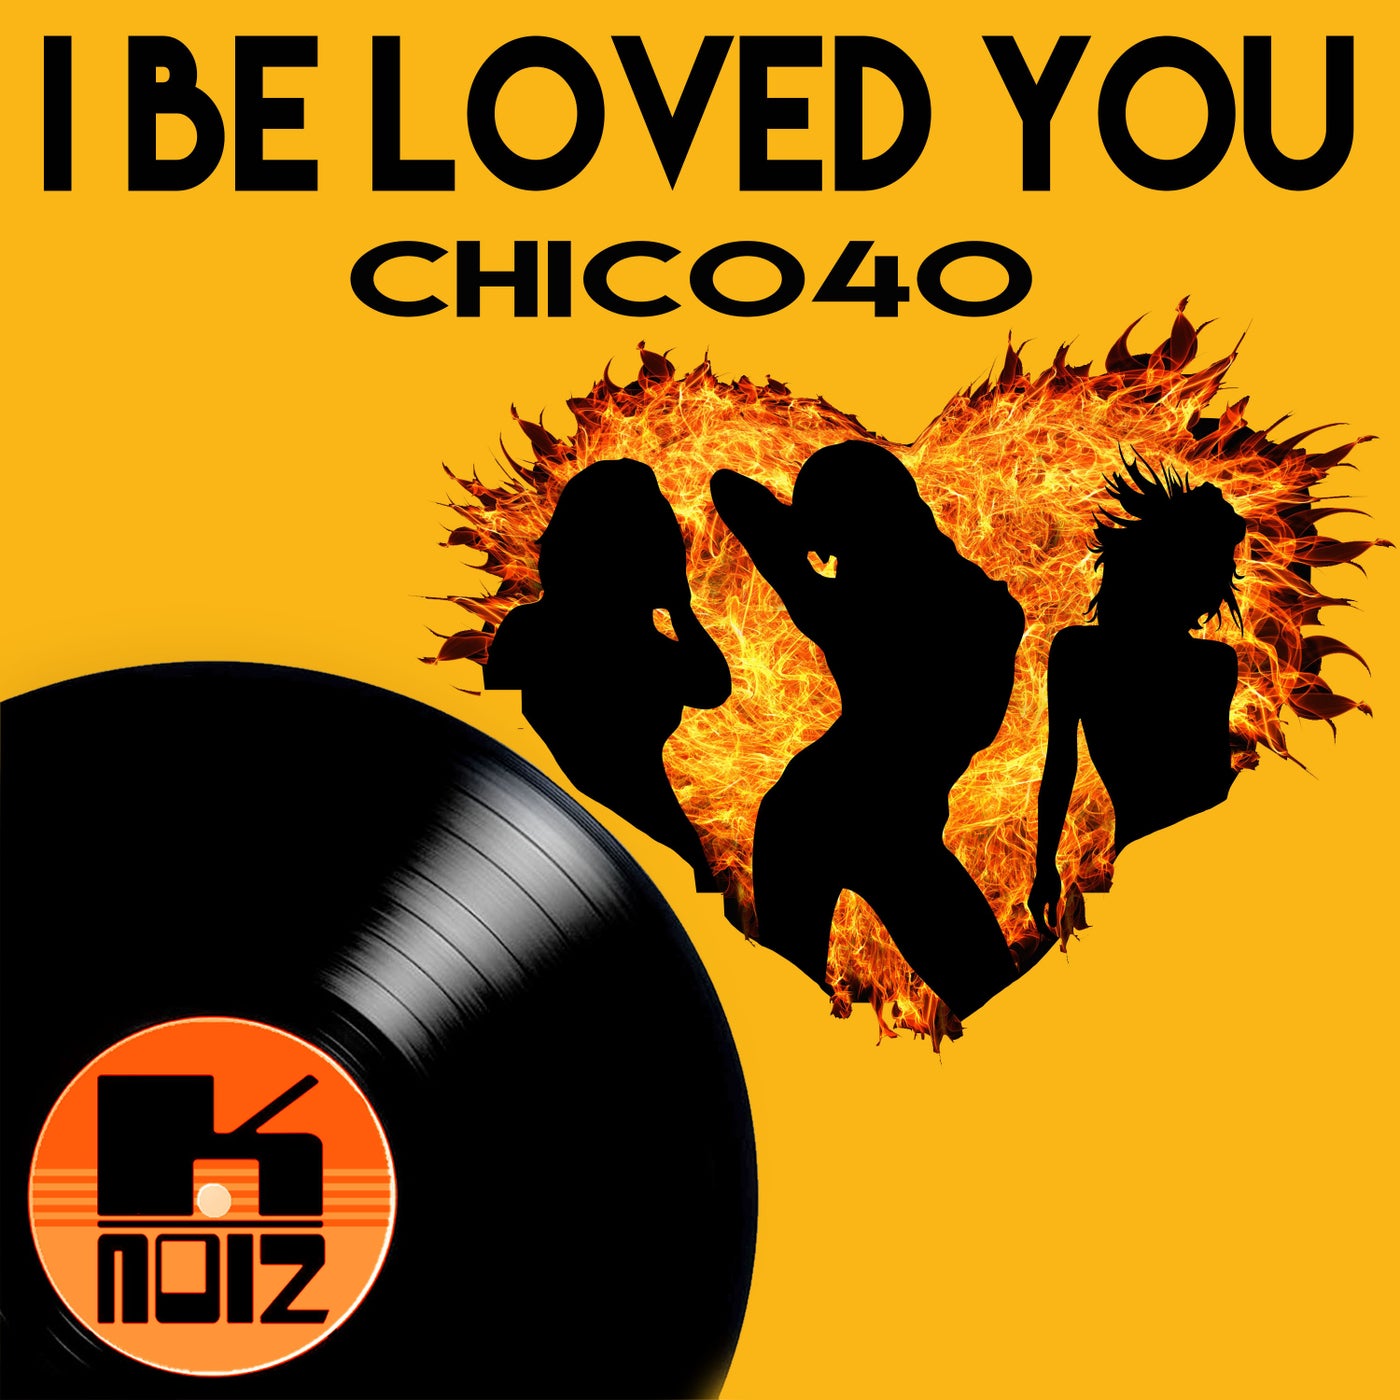 Chico40 - I Be Loved You [K-Noiz]